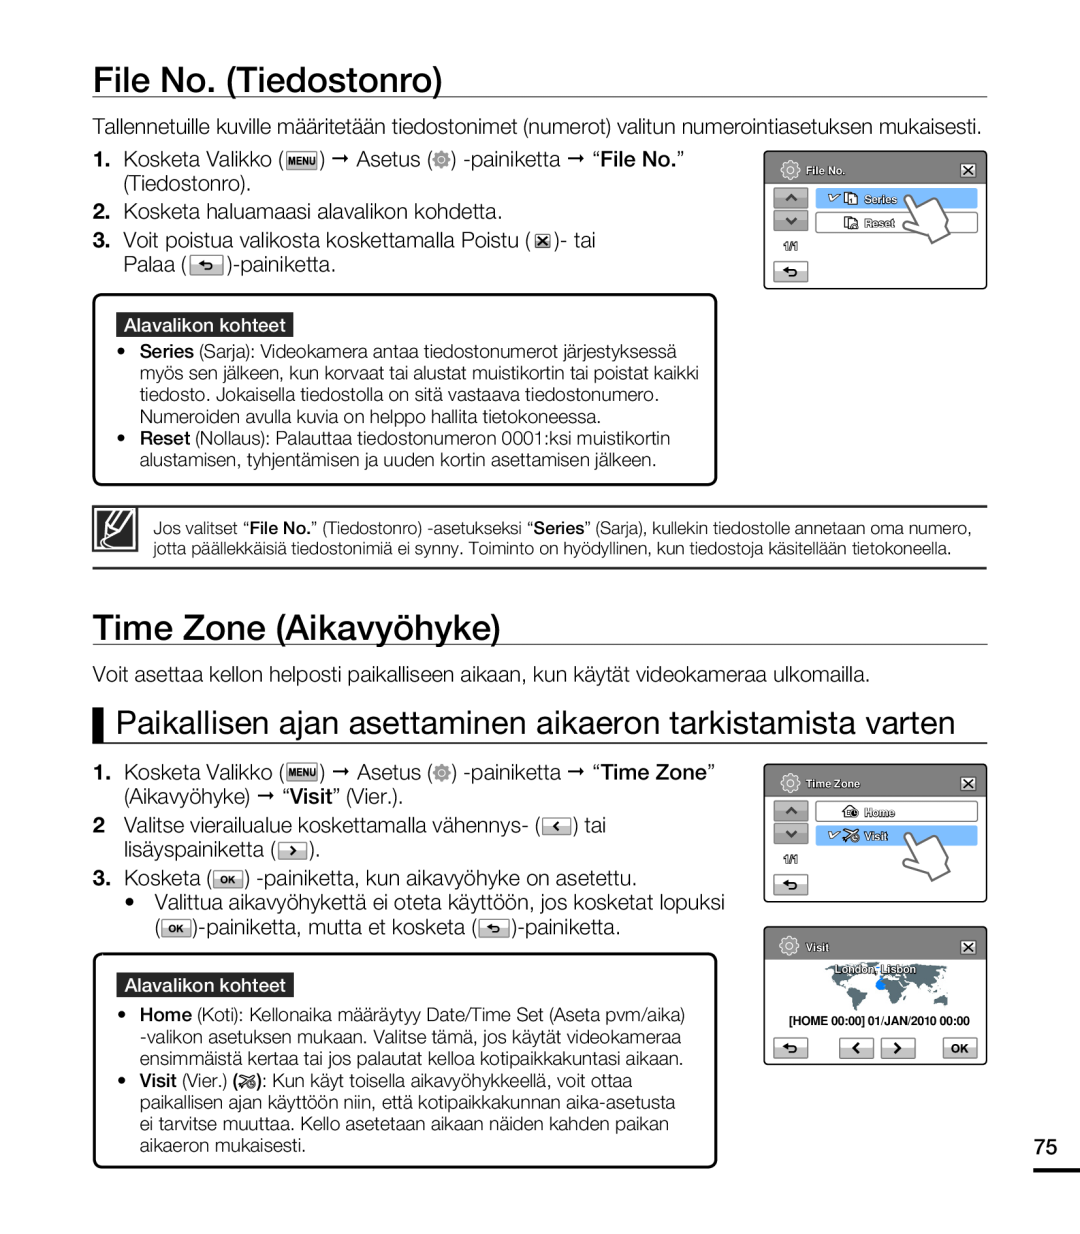 Samsung HMX-T10BP/EDC, HMX-T10WP/EDC manual File No. Tiedostonro, Time Zone Aikavyöhyke 